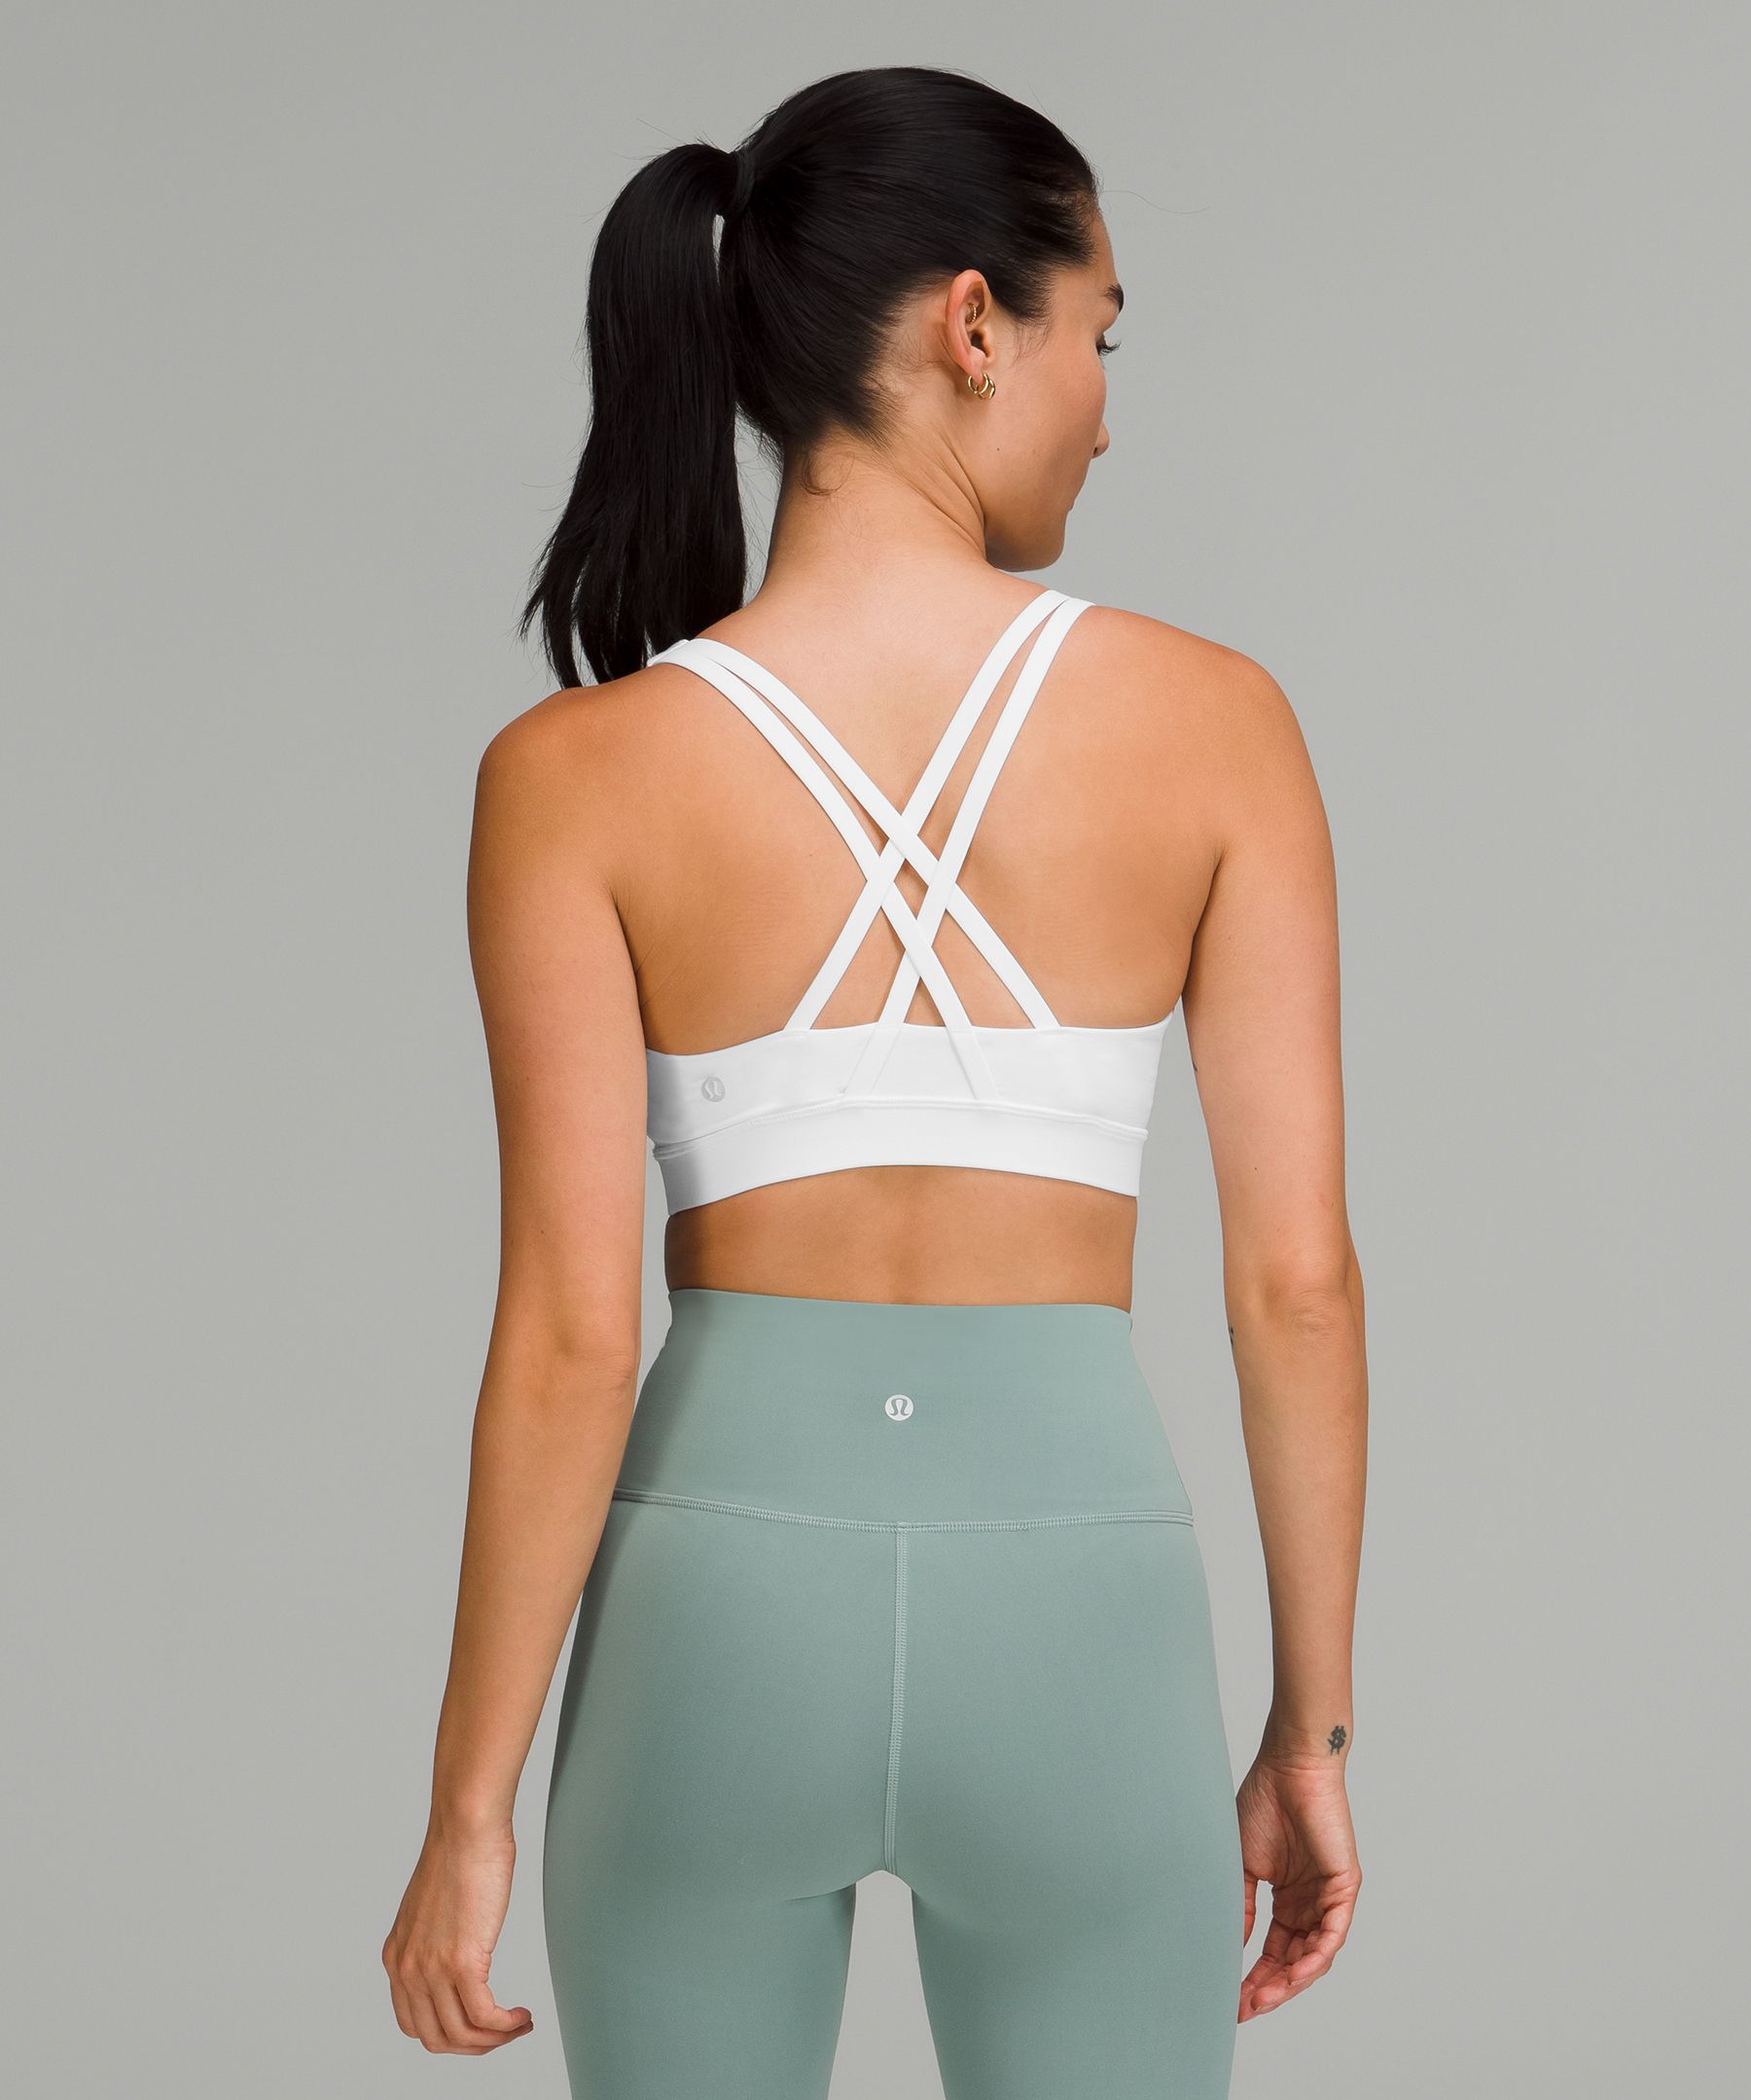 Womens Nylon Sports Bra, Breathable Yoga Bra For Fitness, Gym, Running,  From Chinafashion3, $18.95